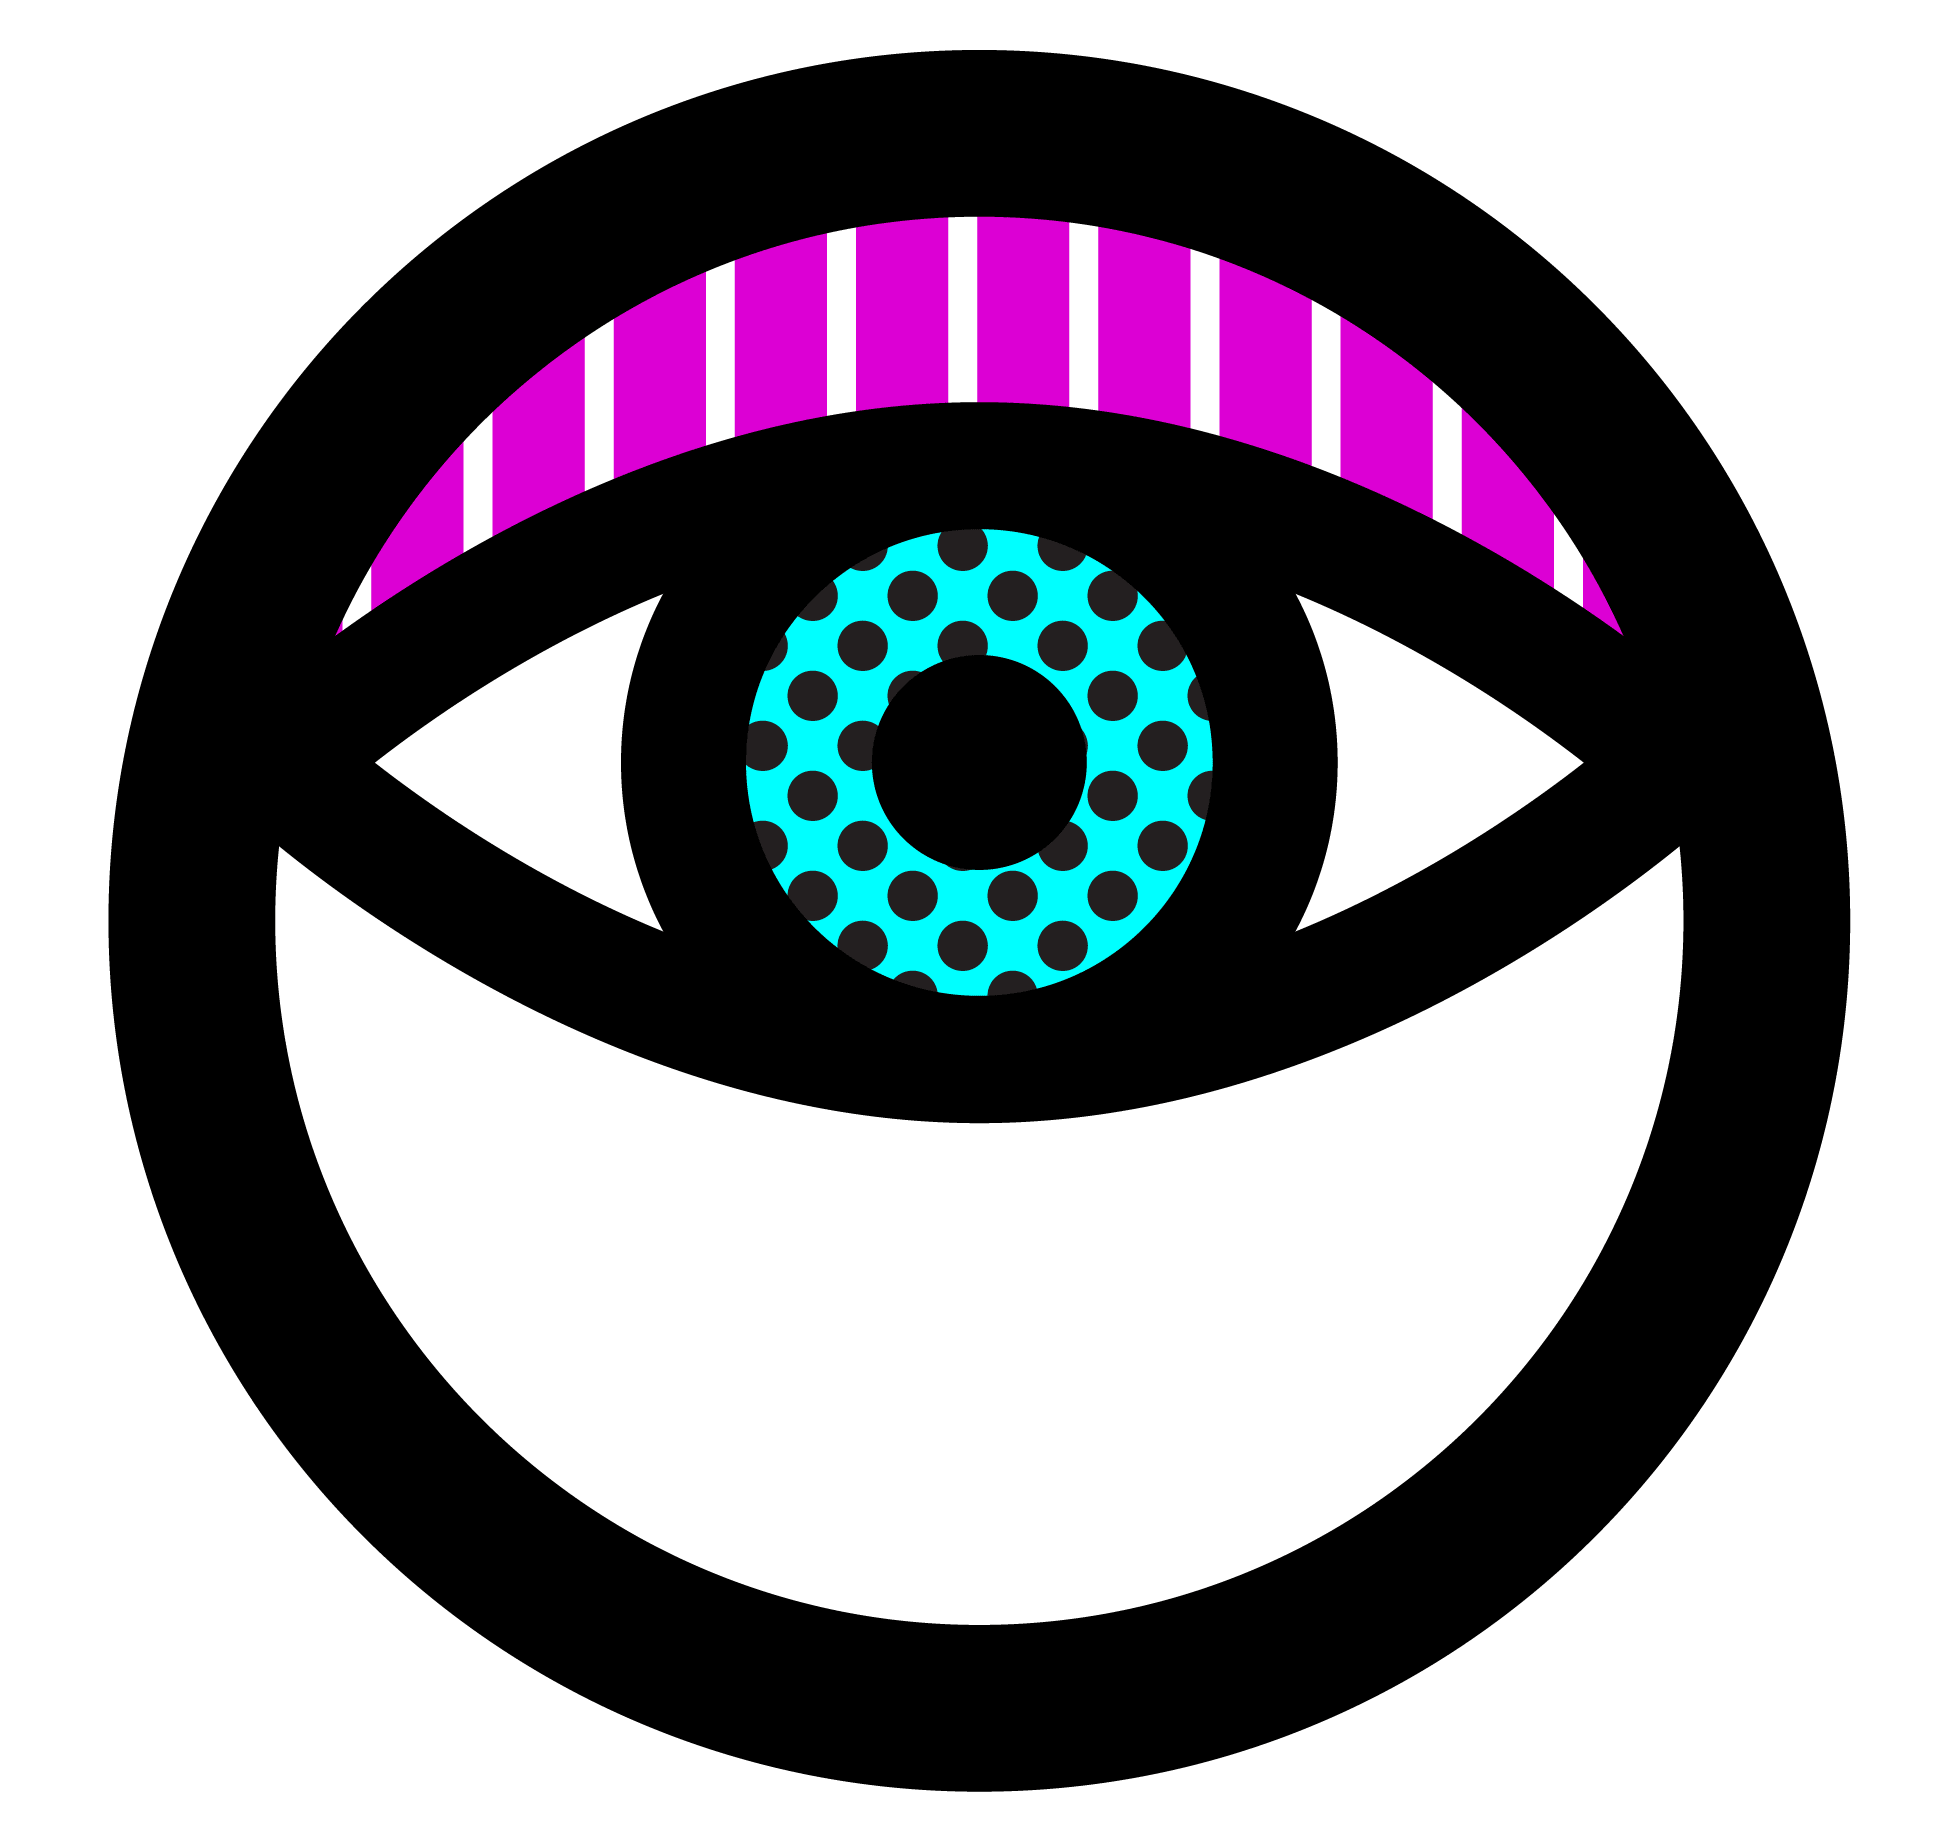 An animated blinking eyeball